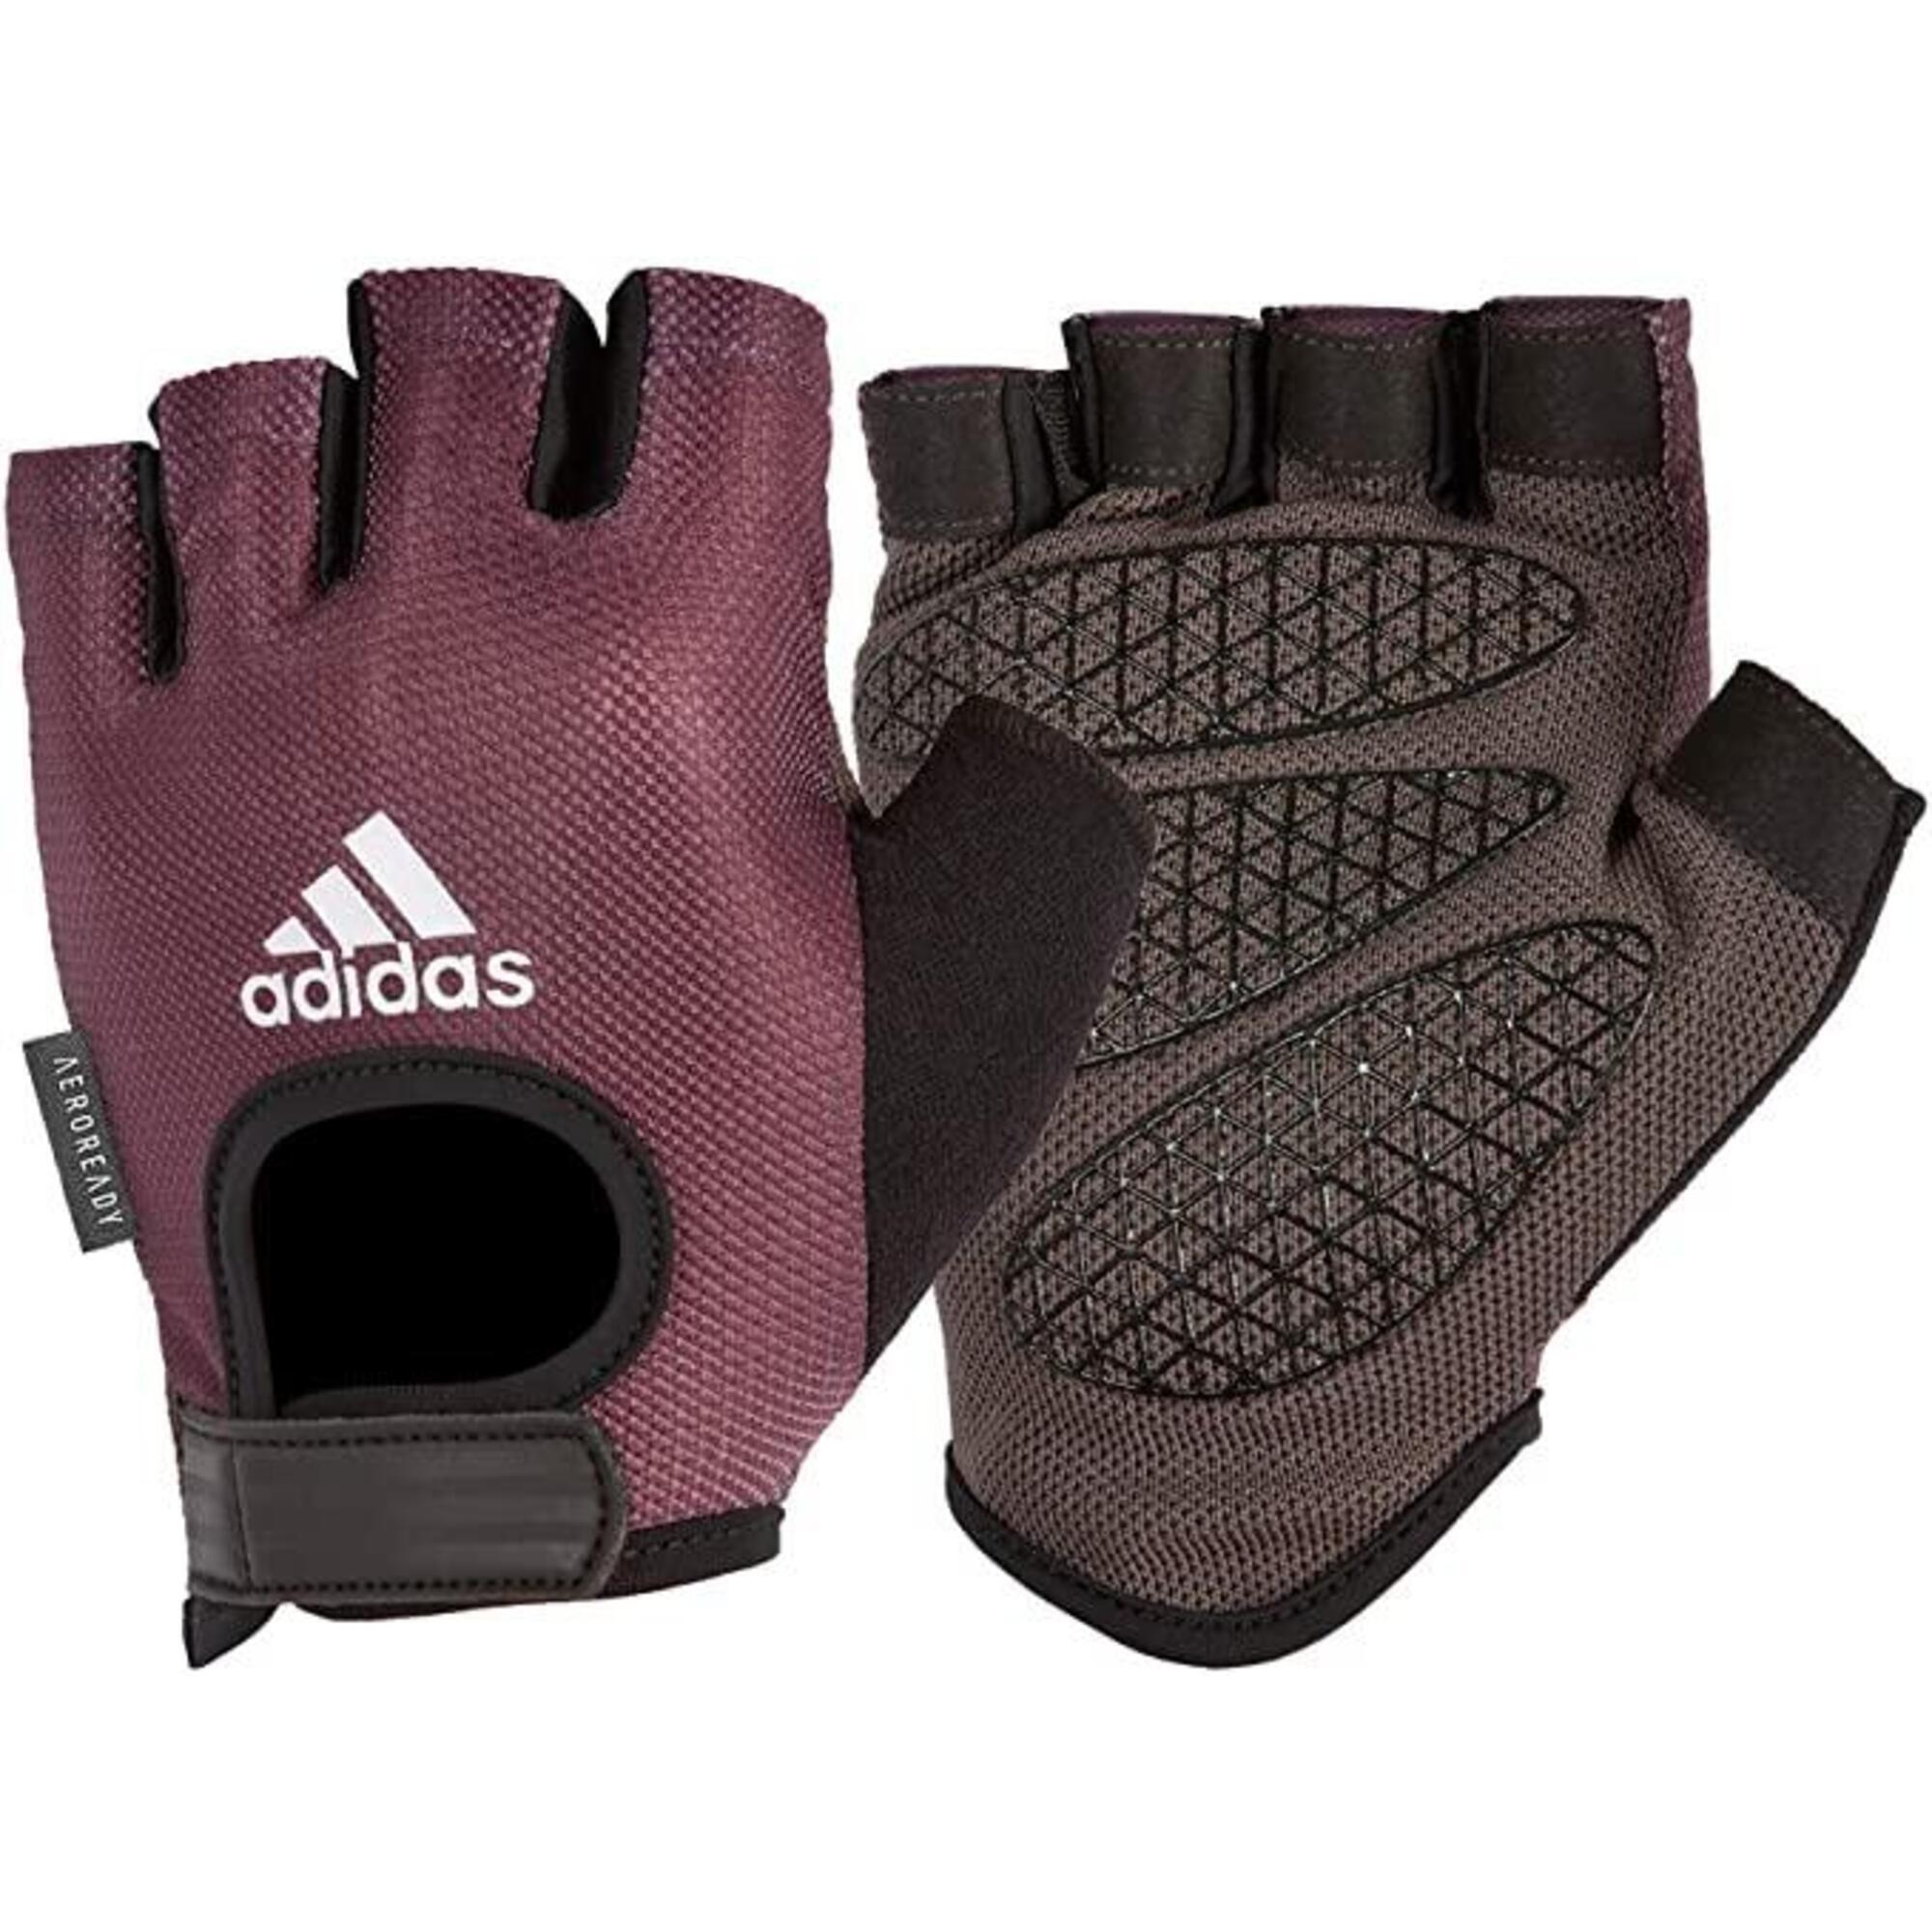 ADIDAS Adidas Womens Performance Gloves